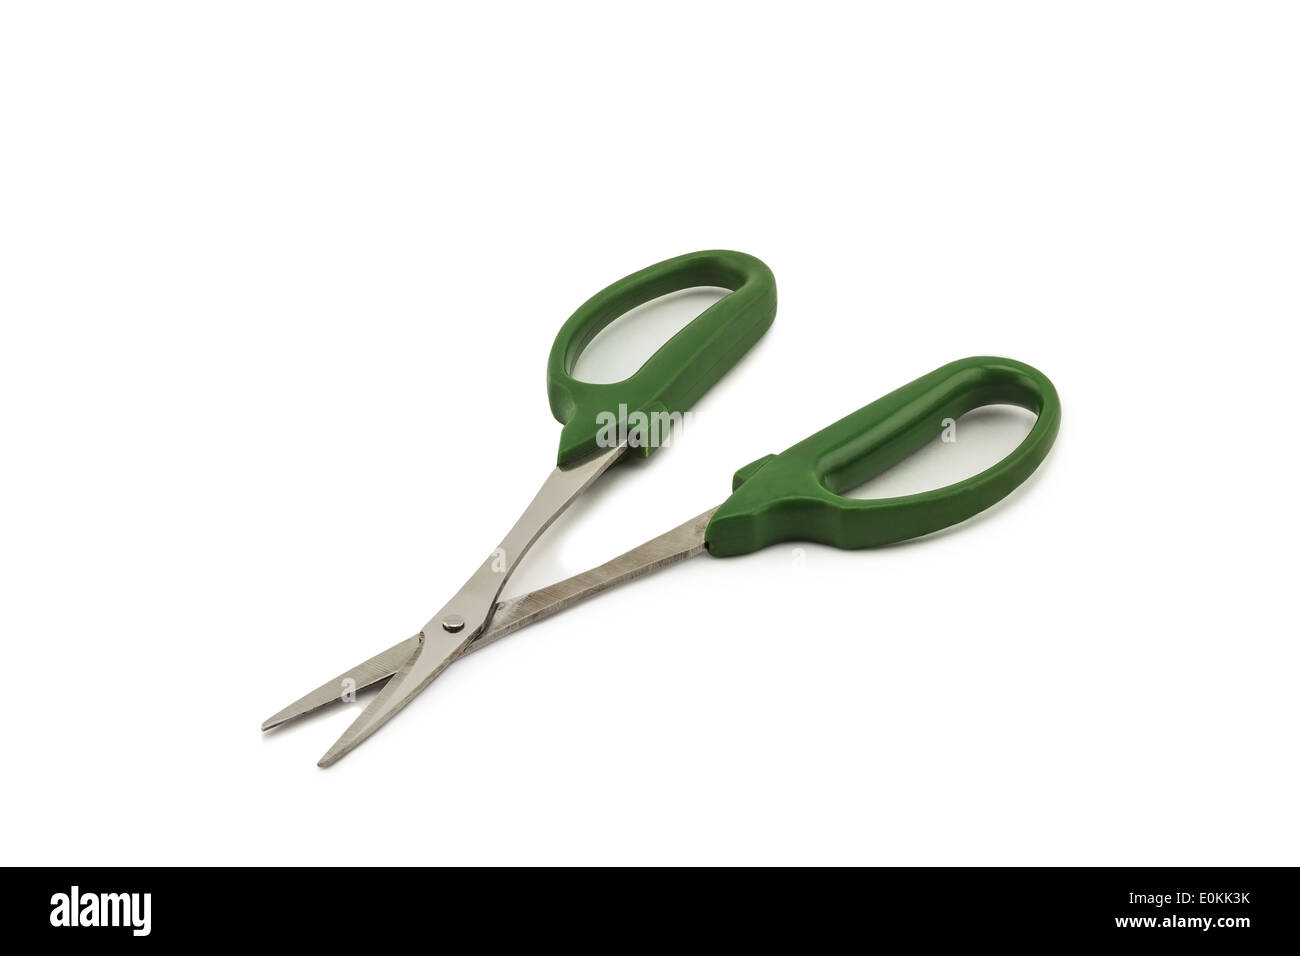 Green scissors on white background Stock Photo